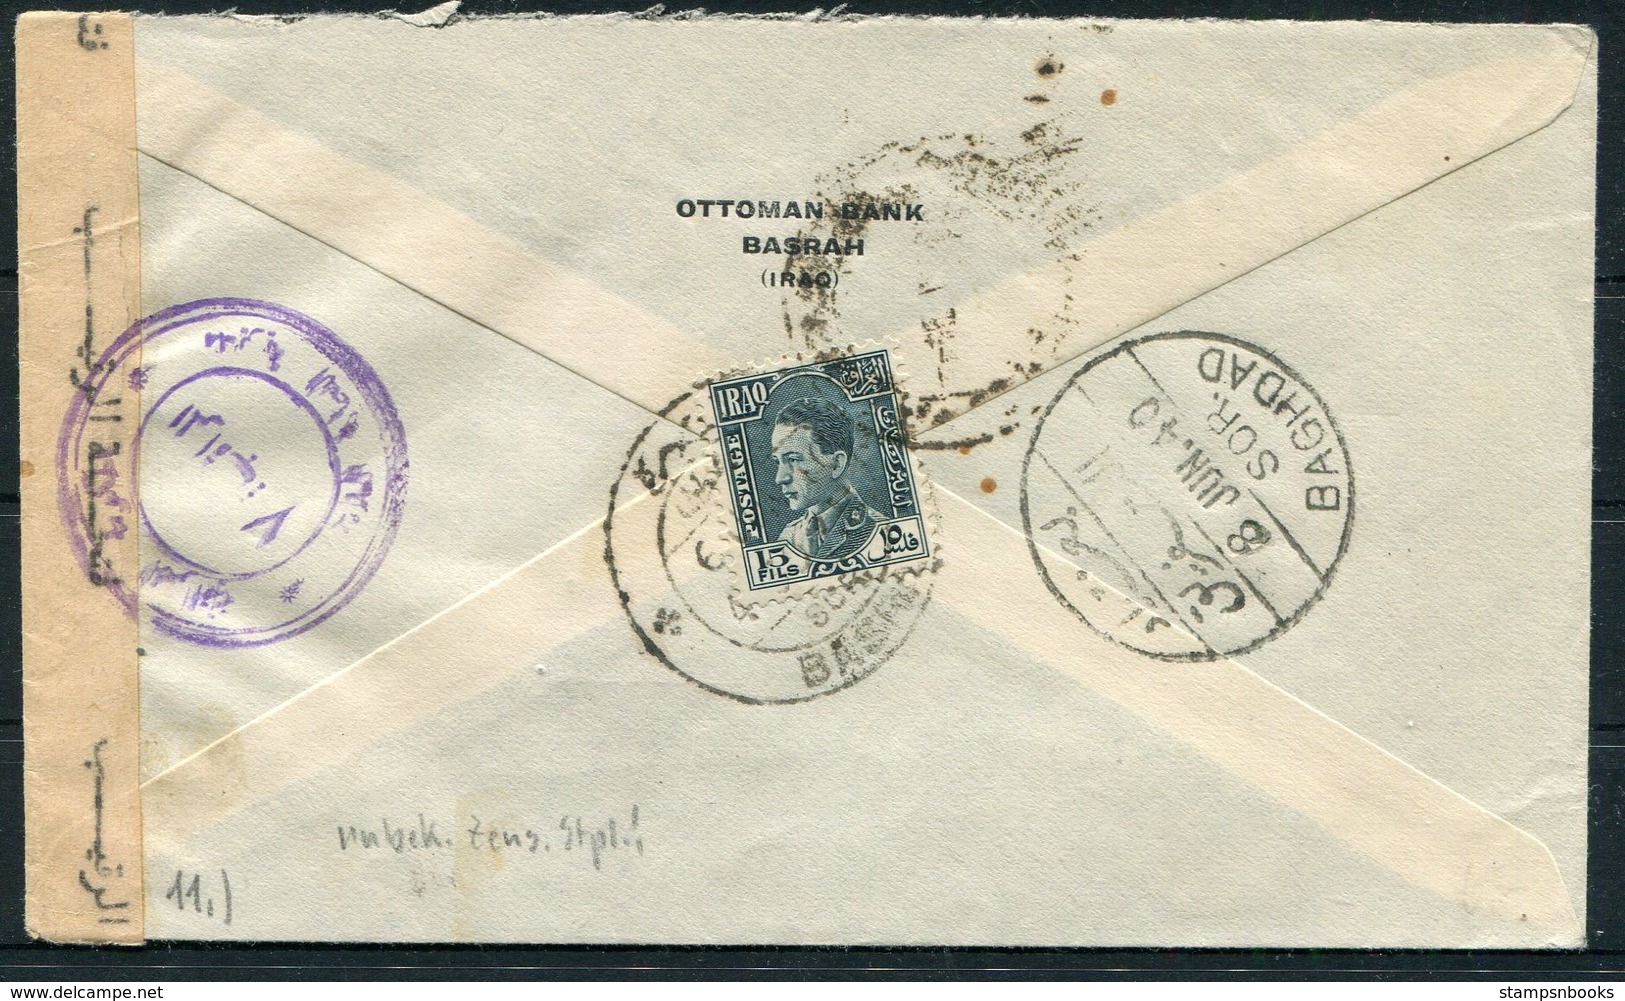 1940 Iraq Ottoman Bank, Basrah Censor Cover - Bank Mellie, Teheran Iran Persia - Iraq